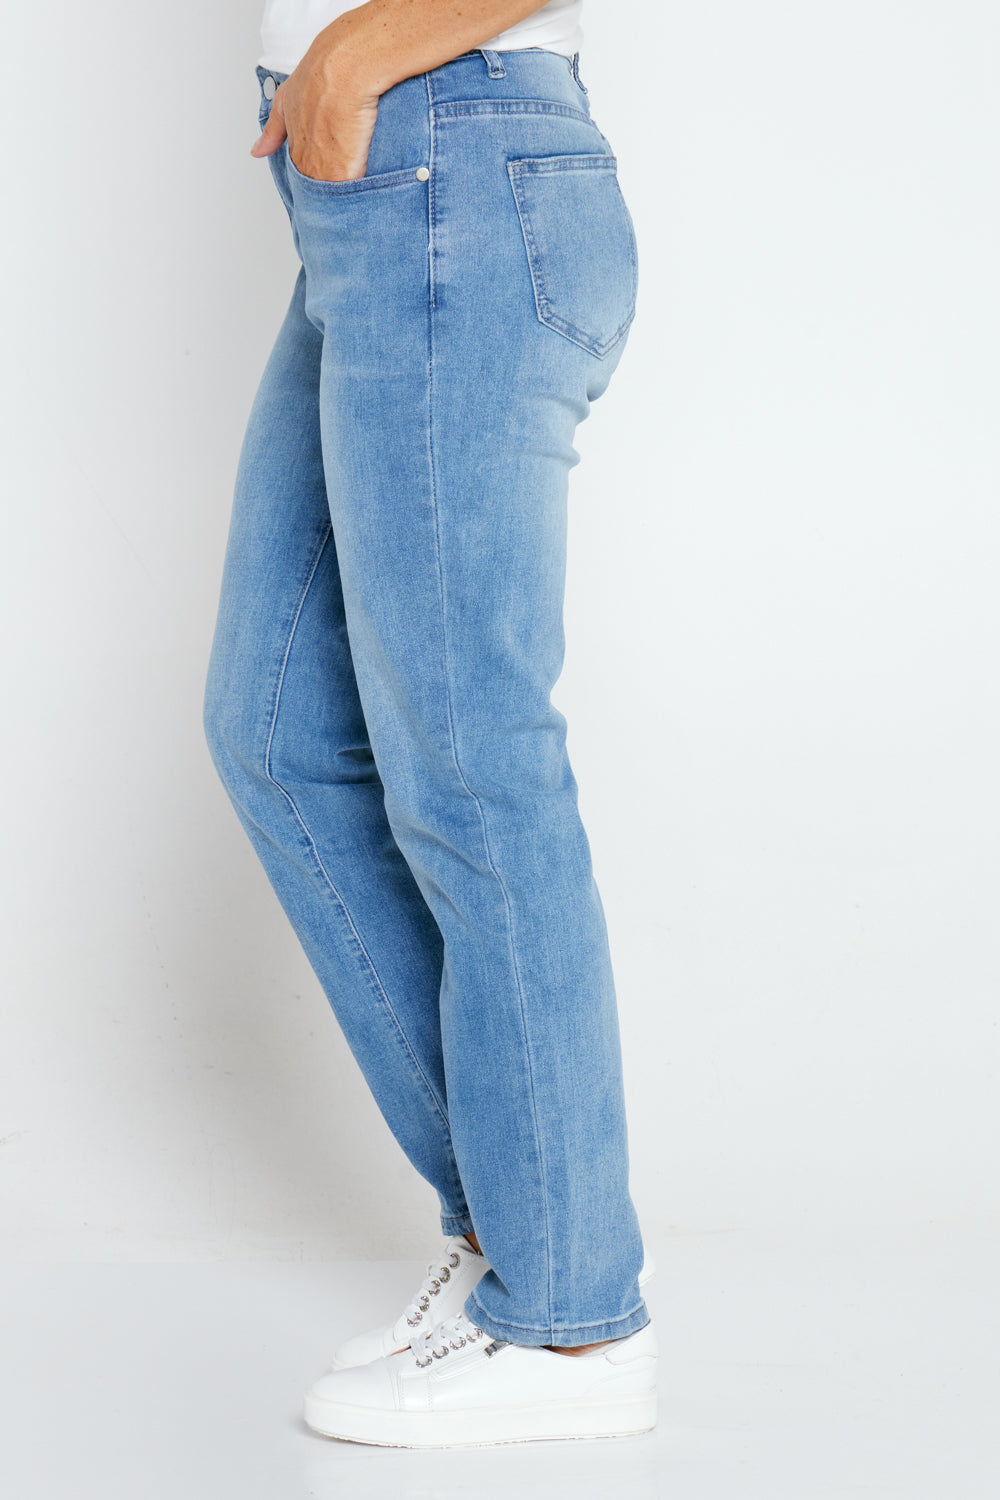 Savannah Cotton Jeans - Denim